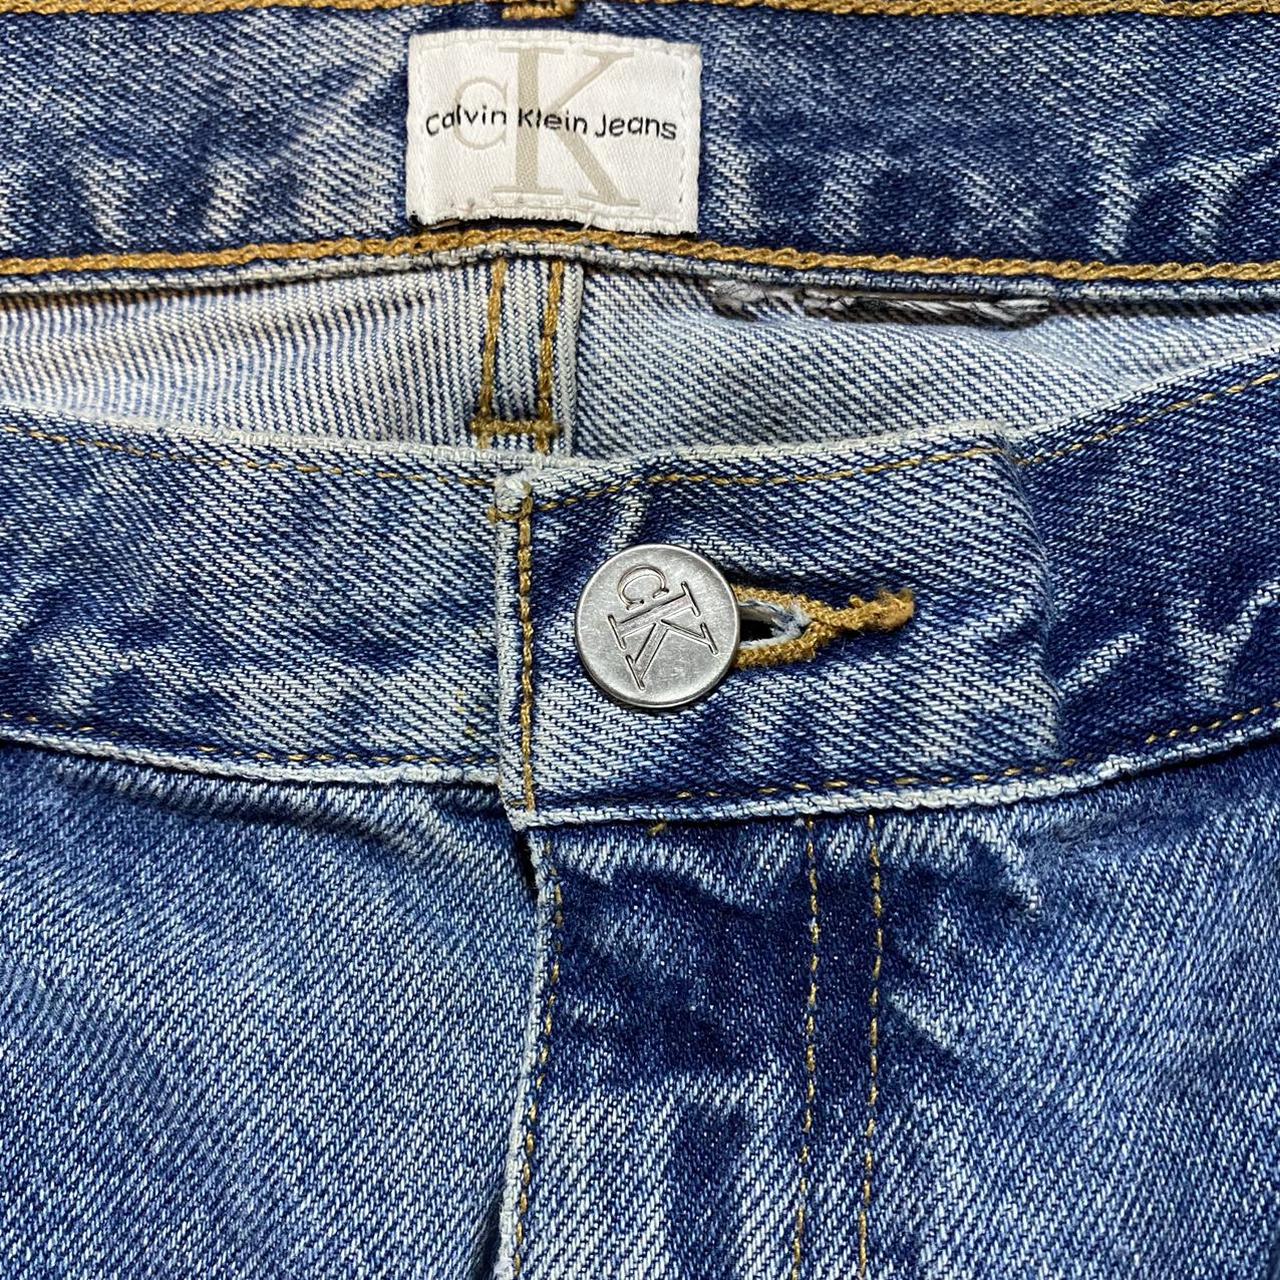 Product Image 4 - Vintage Calvin Klein baggy jeans.